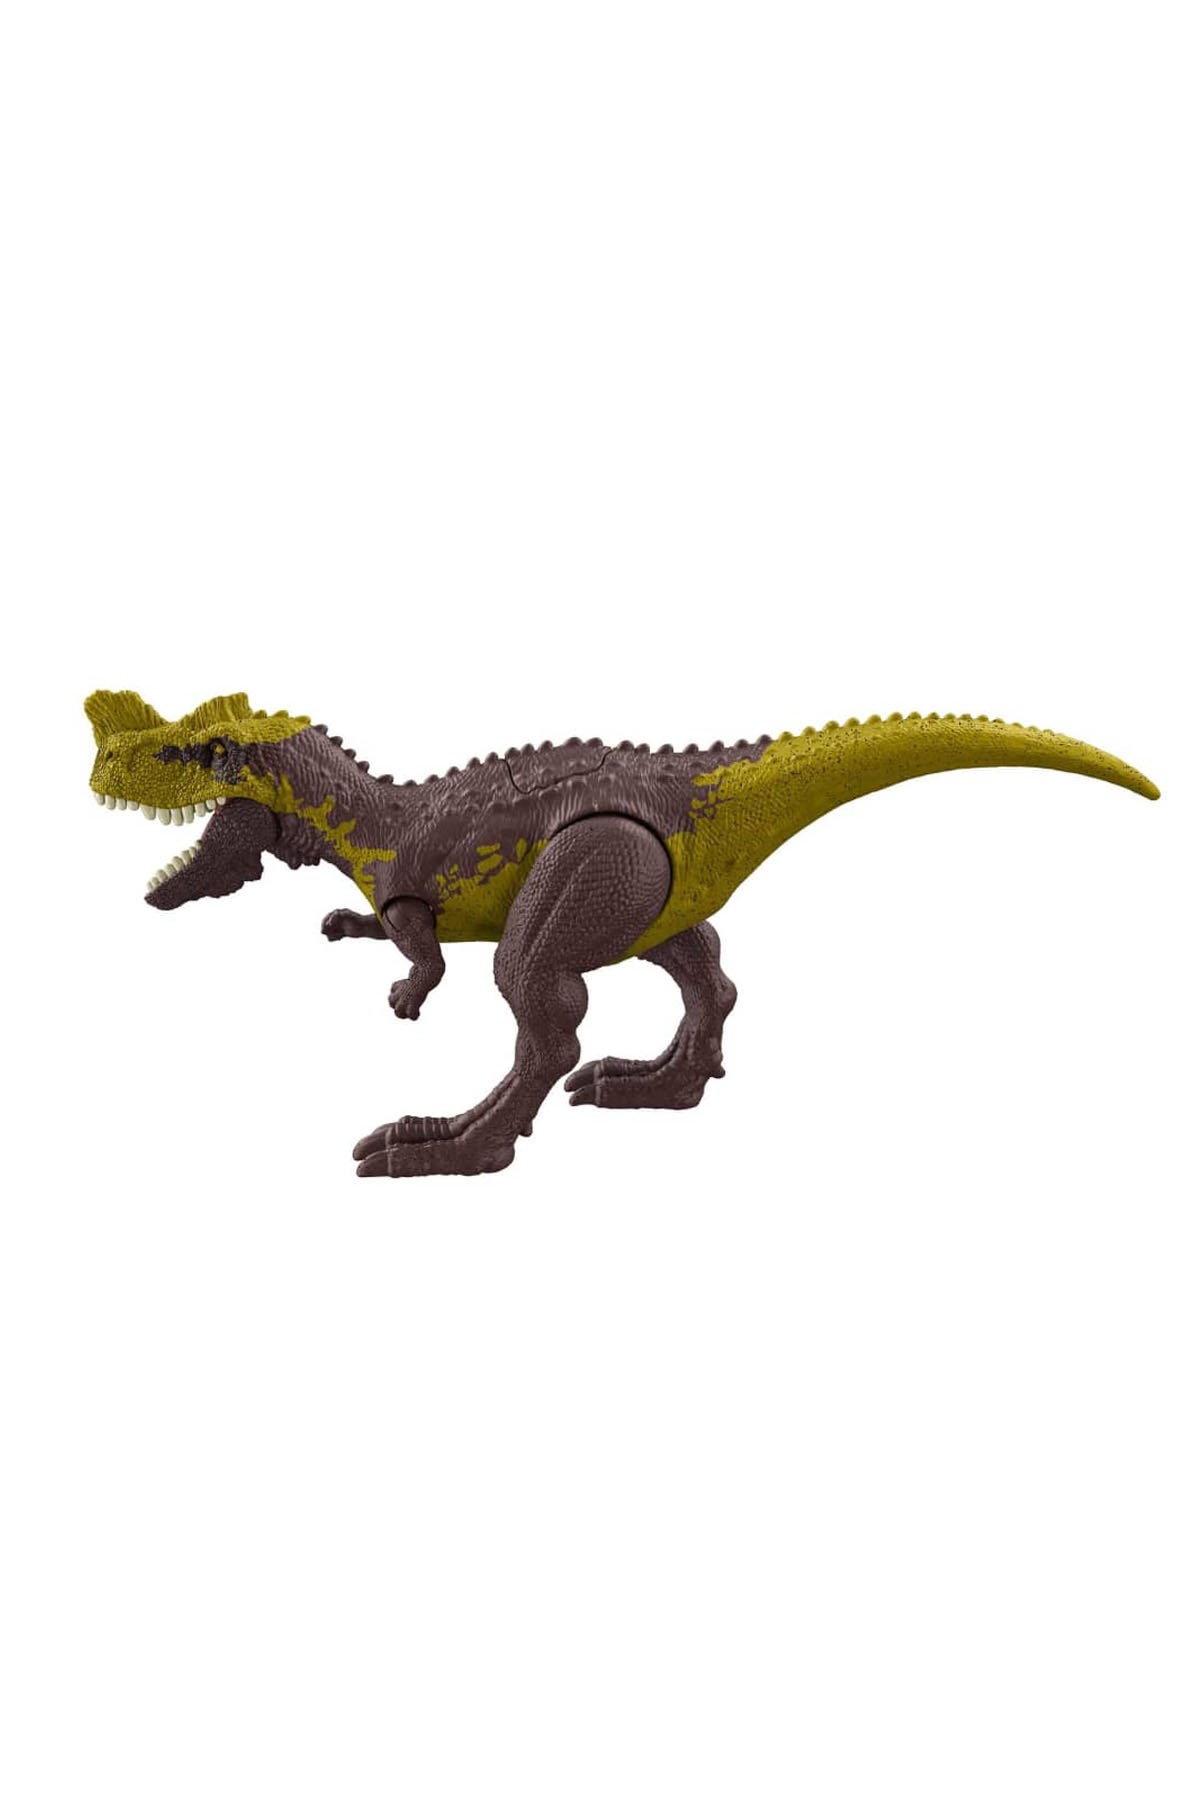 Jurassic World Hareketli Dinozor Figürleri HLN65